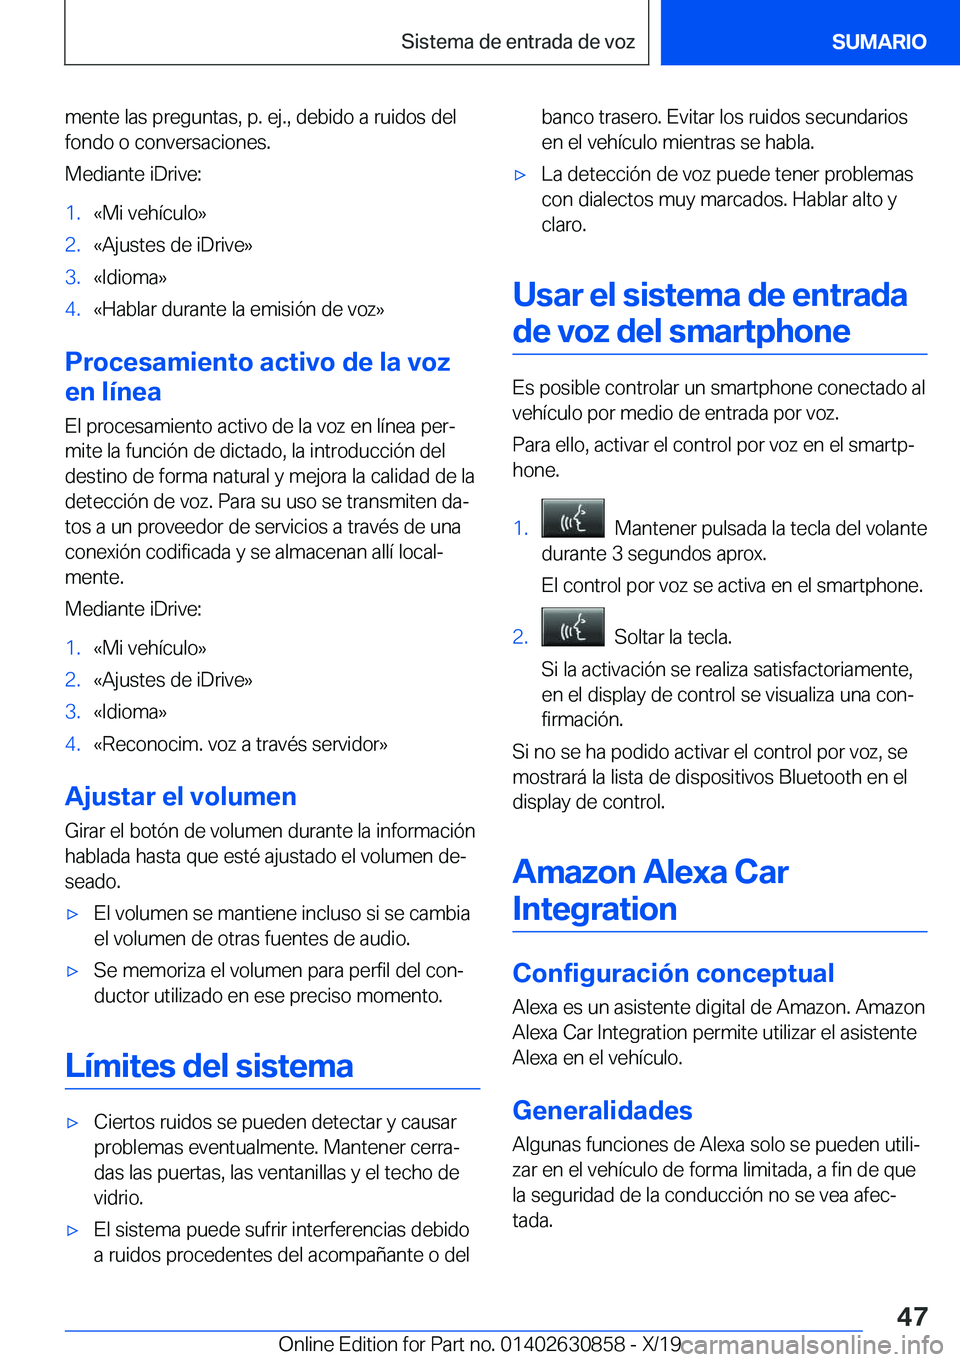 BMW 4 SERIES GRAN COUPE 2020  Manuales de Empleo (in Spanish) �m�e�n�t�e��l�a�s��p�r�e�g�u�n�t�a�s�,��p�.��e�j�.�,��d�e�b�i�d�o��a��r�u�i�d�o�s��d�e�l�f�o�n�d�o��o��c�o�n�v�e�r�s�a�c�i�o�n�e�s�.
�M�e�d�i�a�n�t�e��i�D�r�i�v�e�:�1�.�«�M�i��v�e�h�